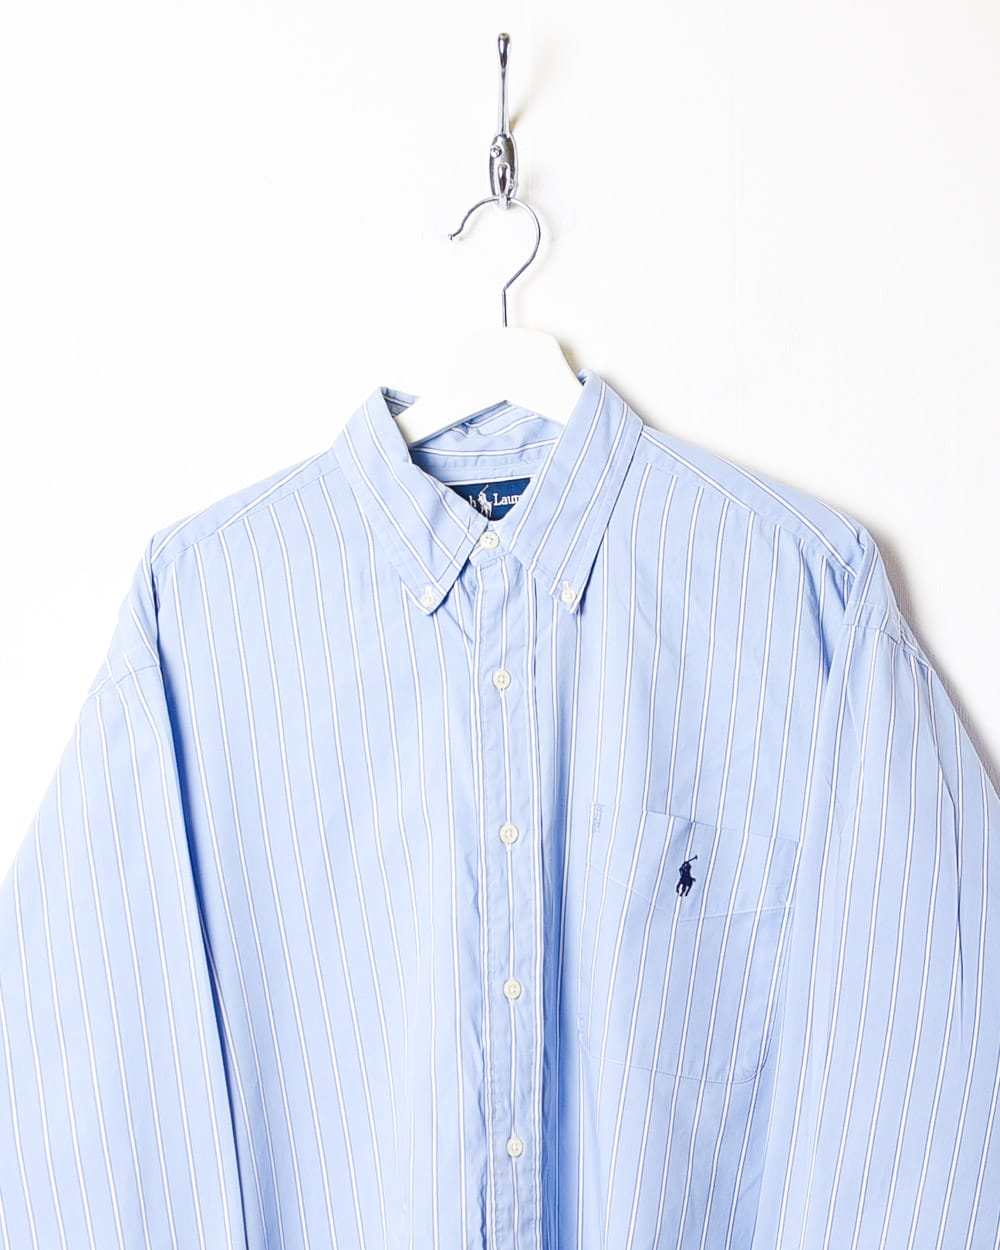 BabyBlue Polo Ralph Lauren Blake Shirt - Large